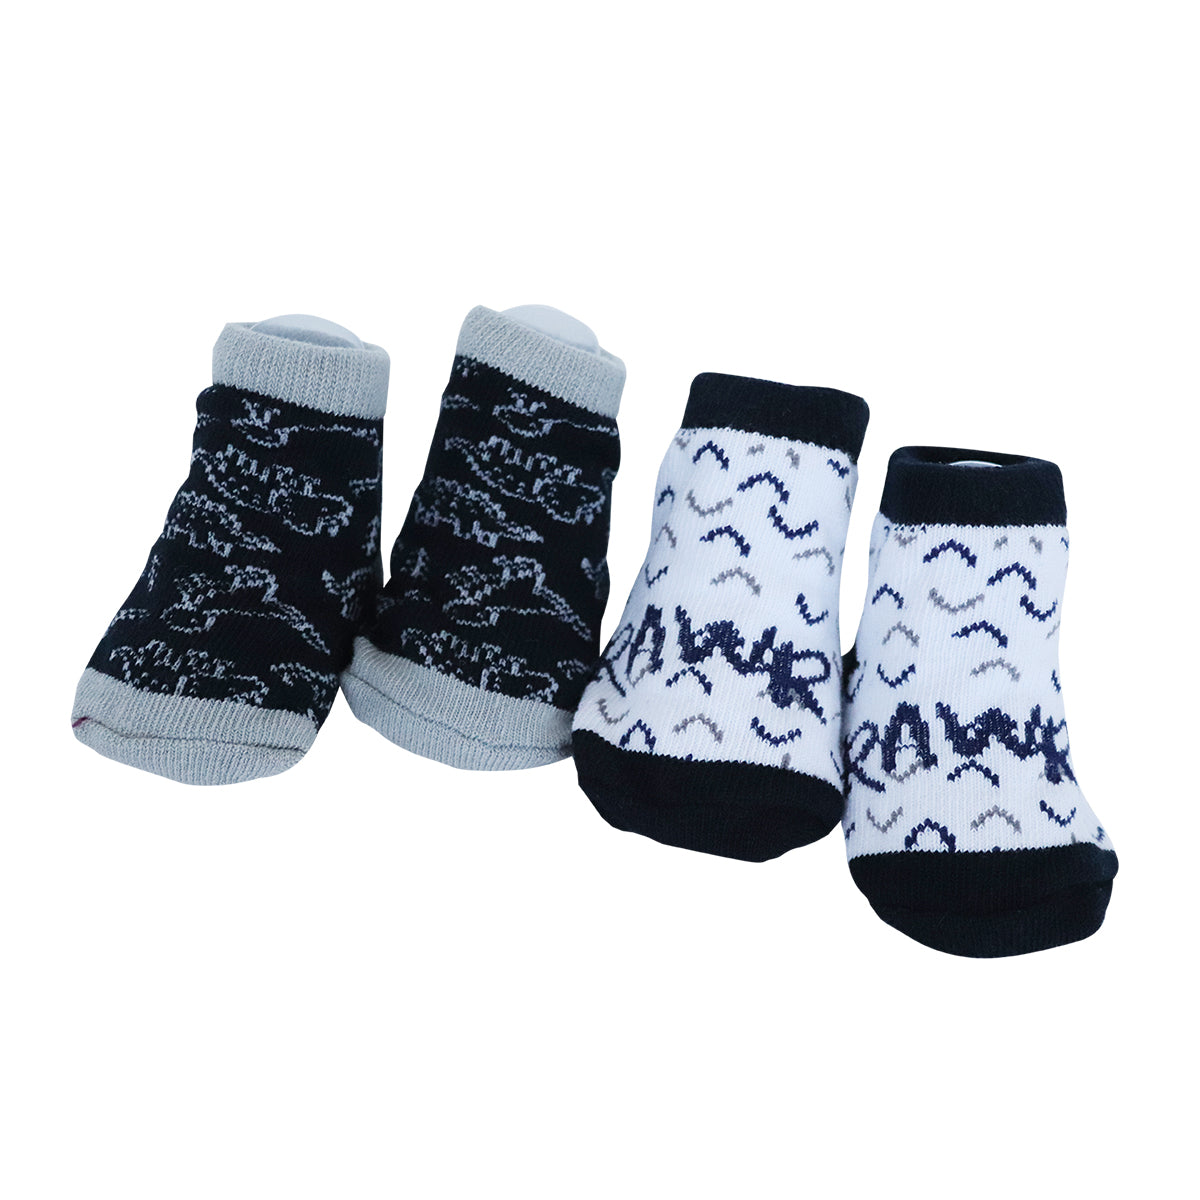 Snuggletime 5-Piece Gift Set - 3 Bandana Bibs and 2 Pairs of Socks